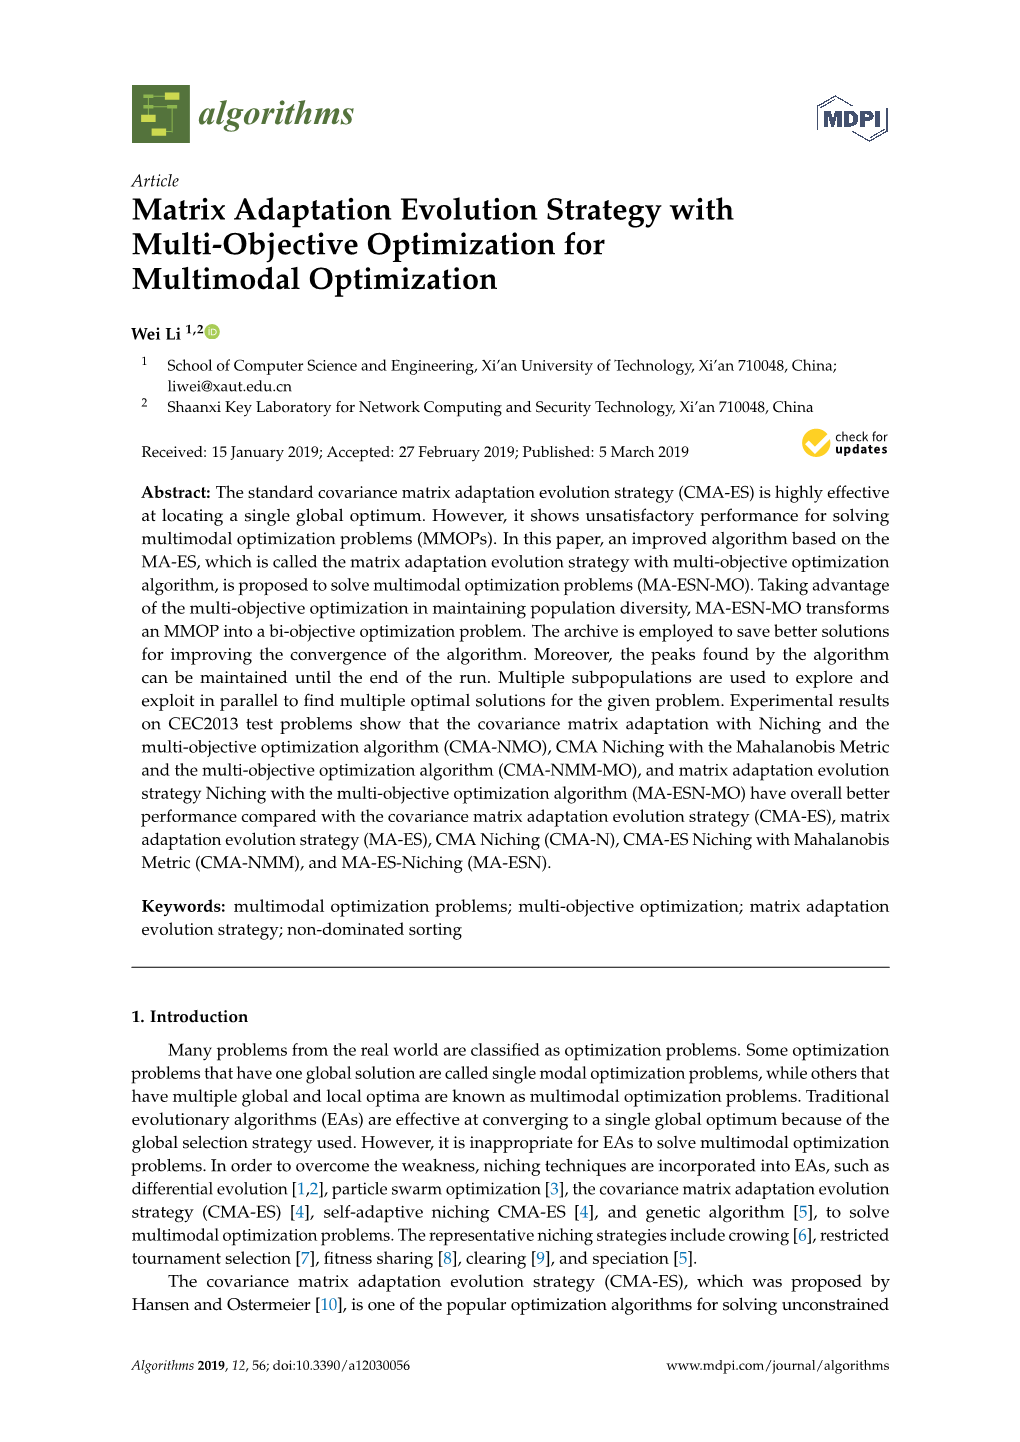 Matrix Adaptation Evolution Strategy with Multi-Objective Optimization for Multimodal Optimization